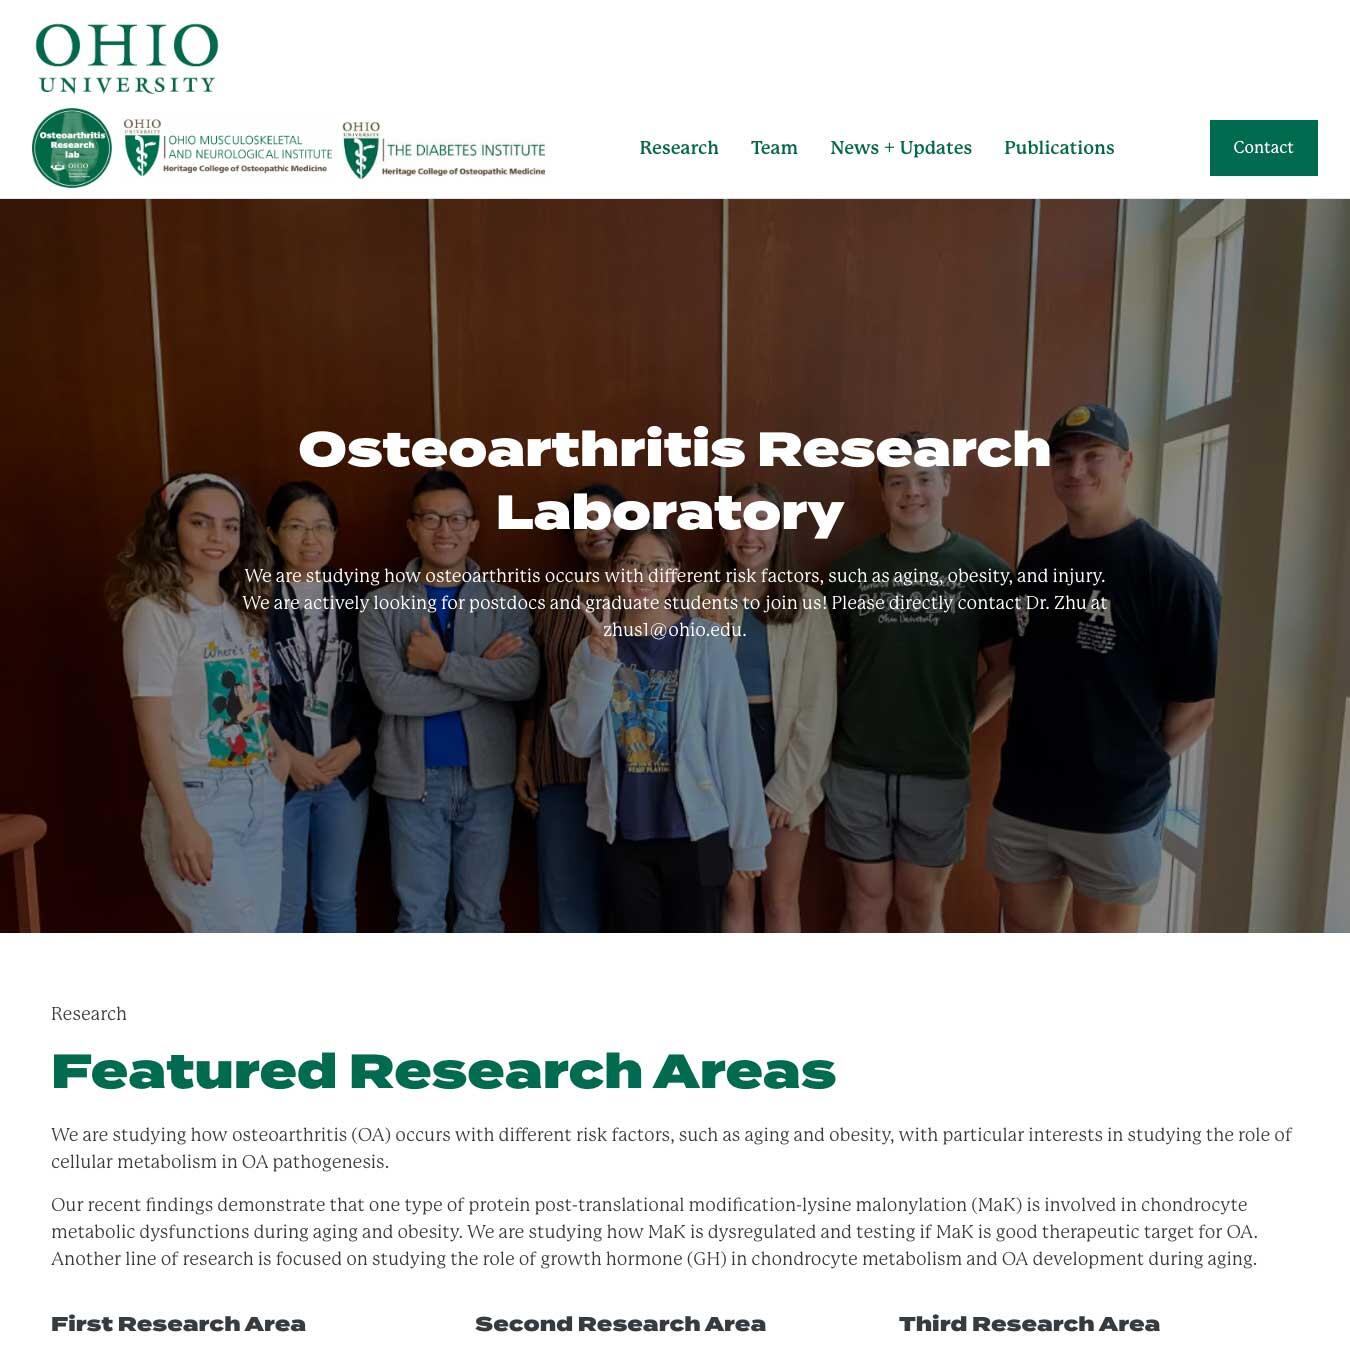 Osteoarthritis Research Laboratory website